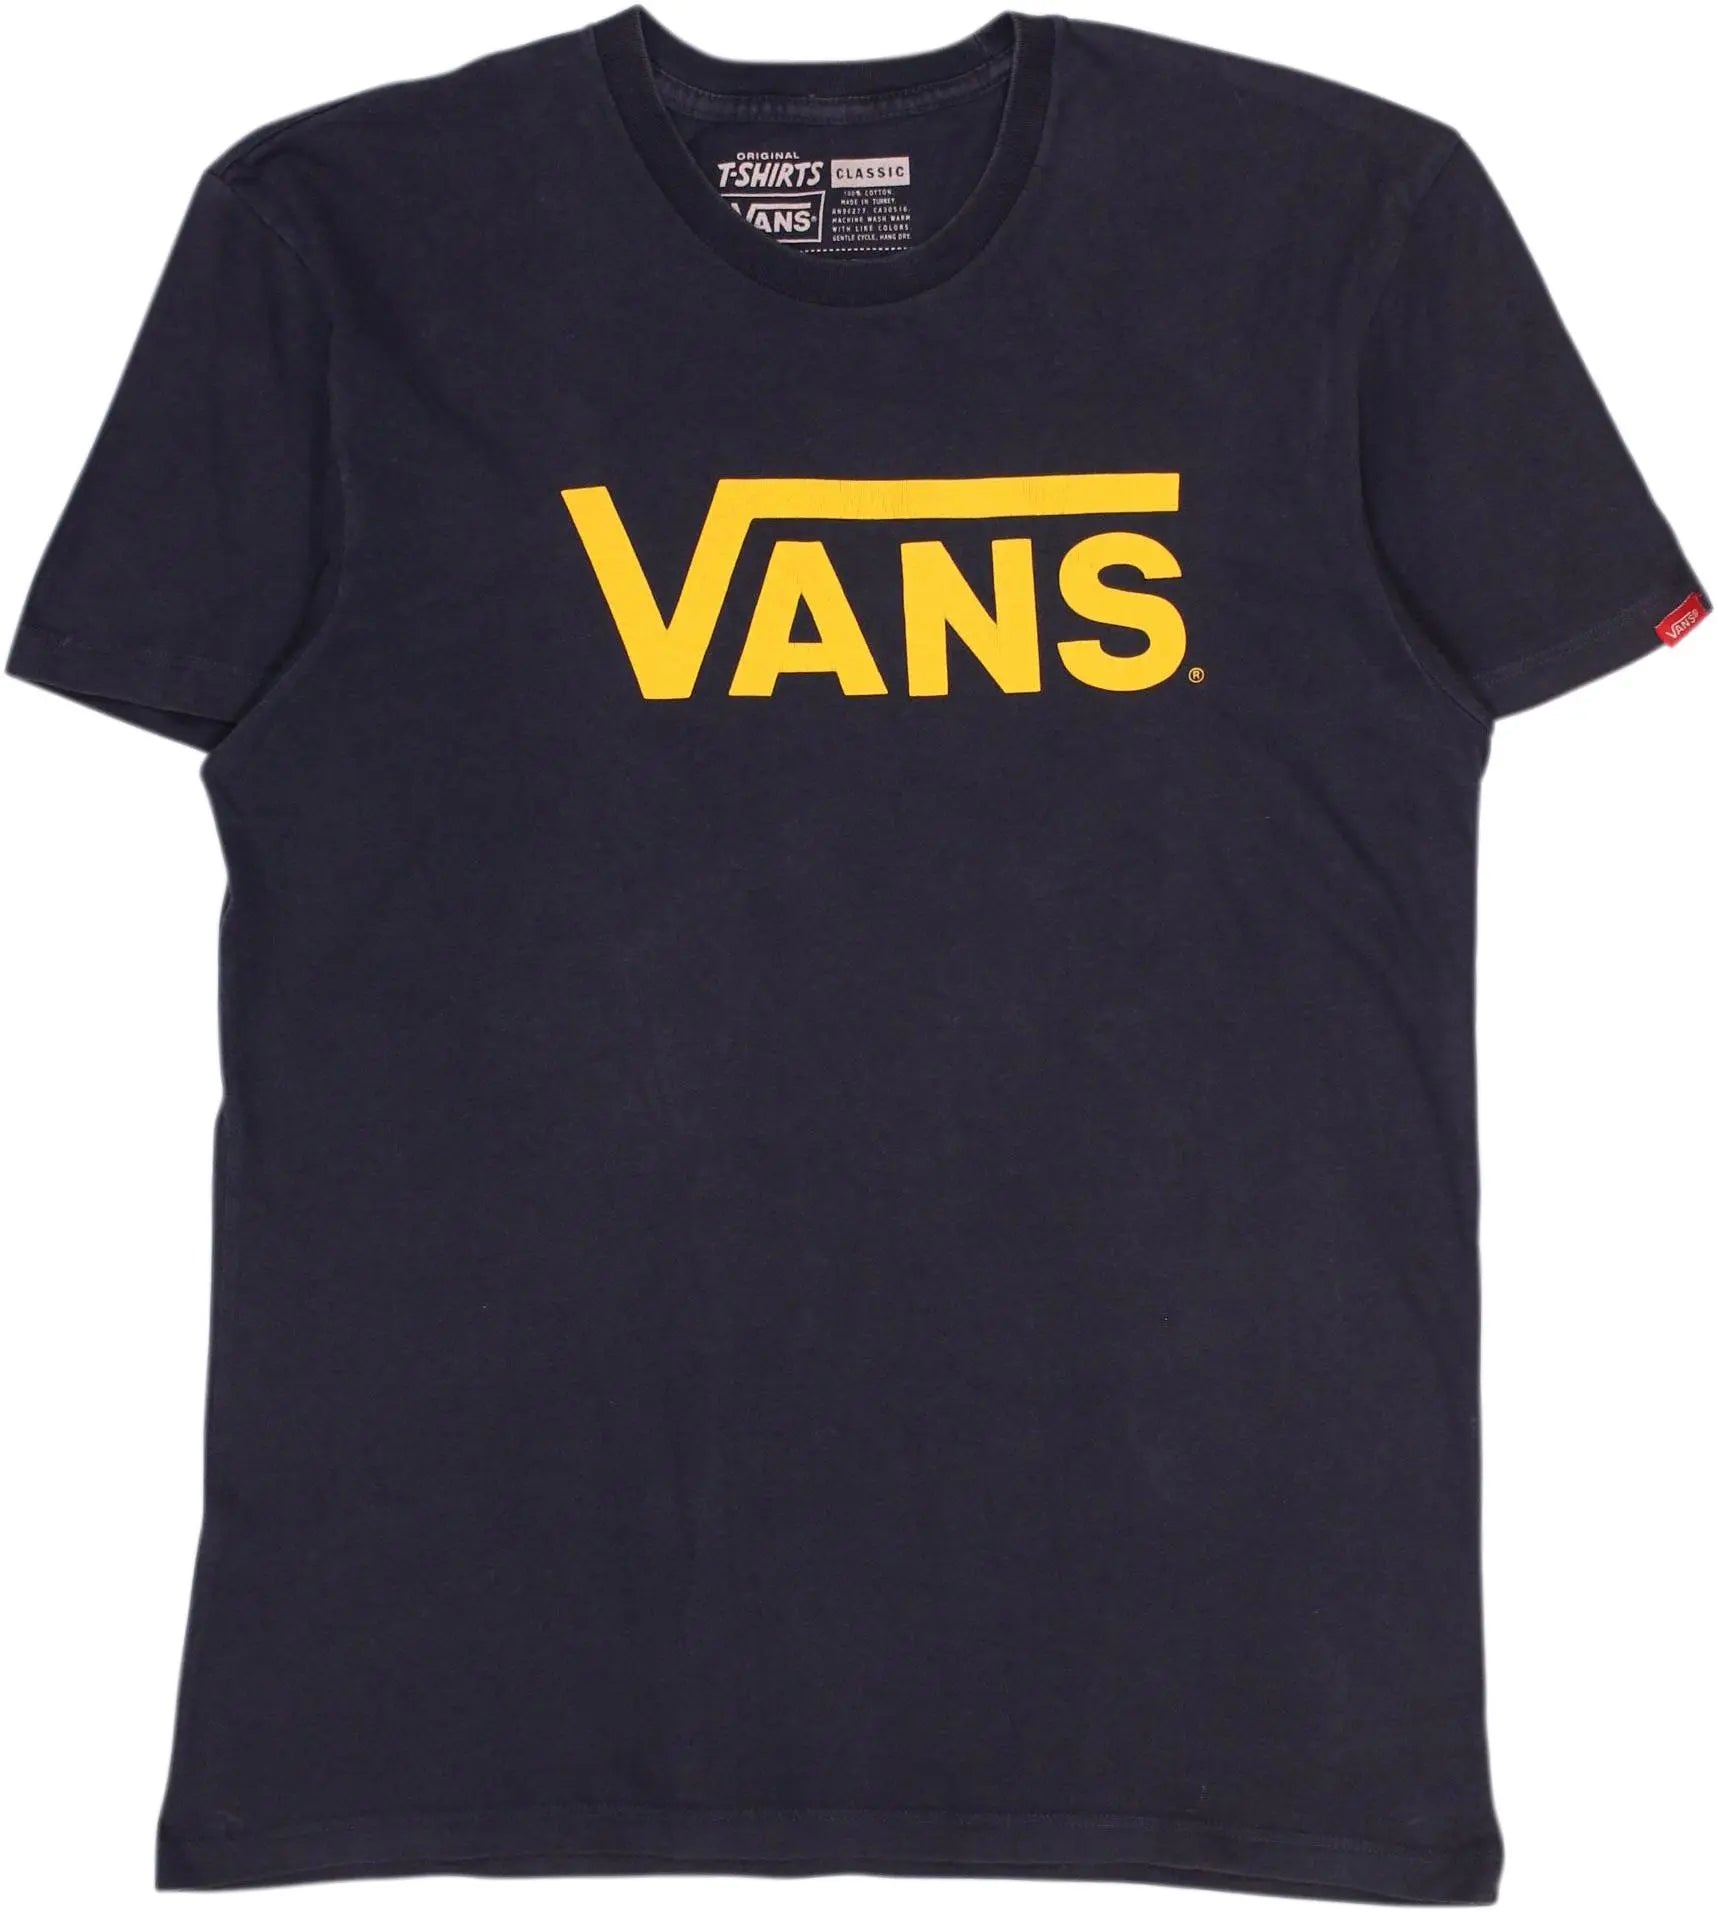 Vans - Vans-T-Shirt- ThriftTale.com - Vintage and second handclothing